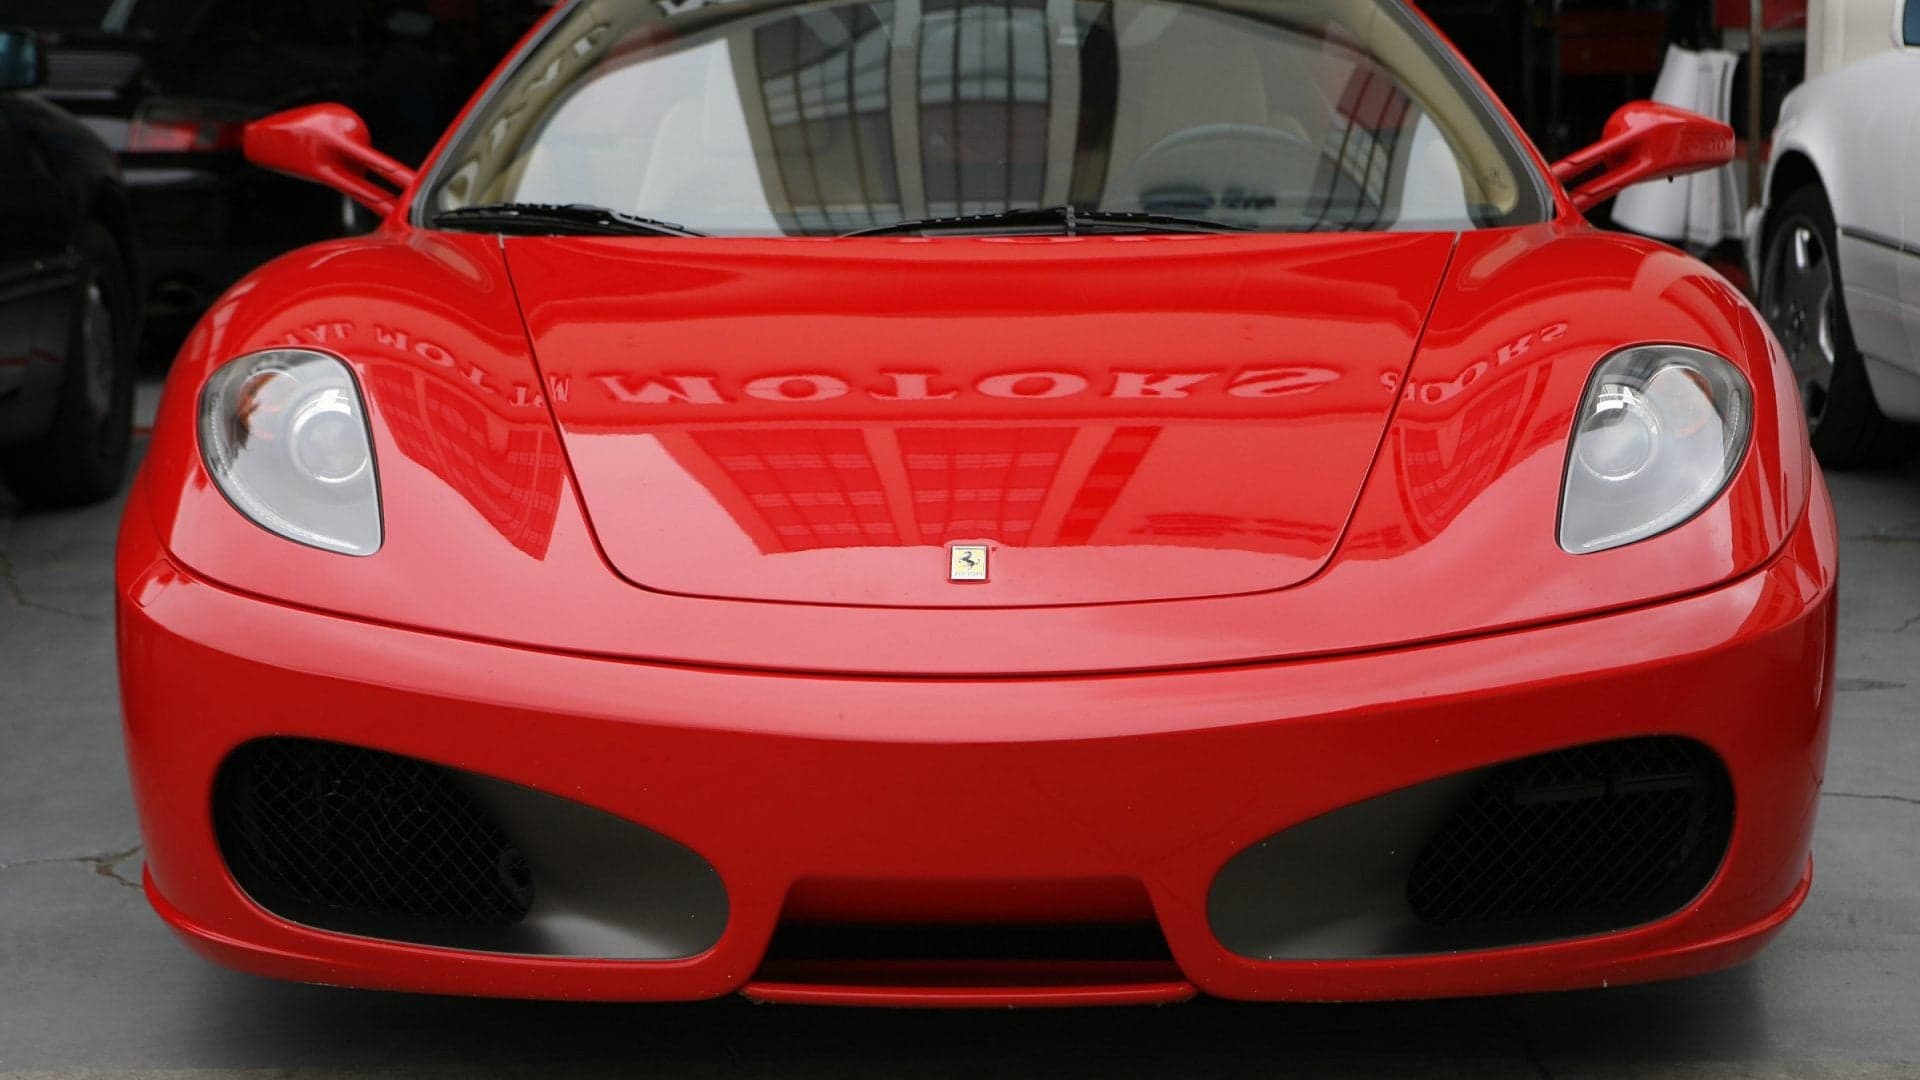 Ferrari F430 Owner Who Sued Arkansas Dealership Won’t Get Millions After All